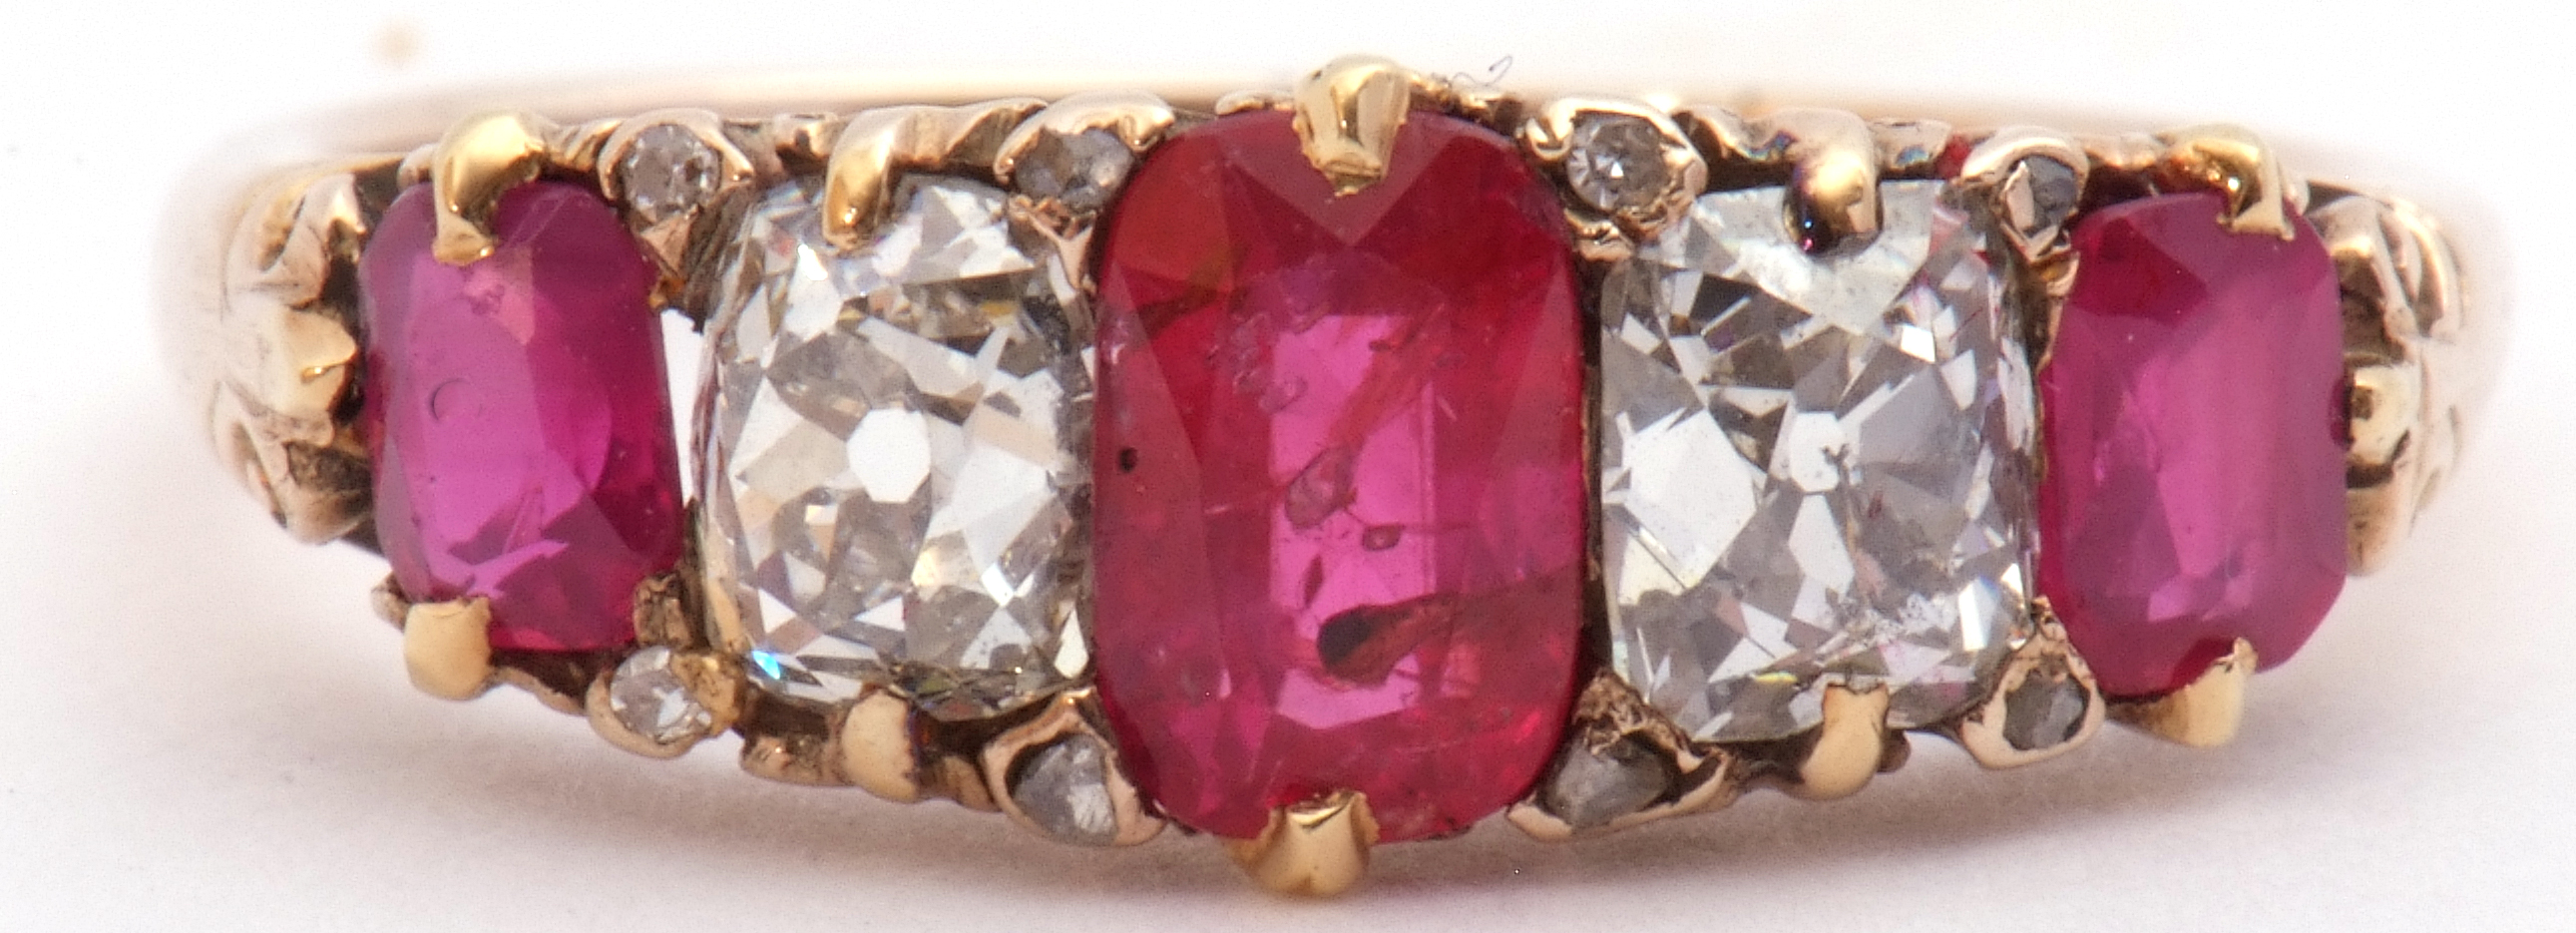 Ruby and diamond five stone ring, an alternate design featuring three graduated cushion cut rubies